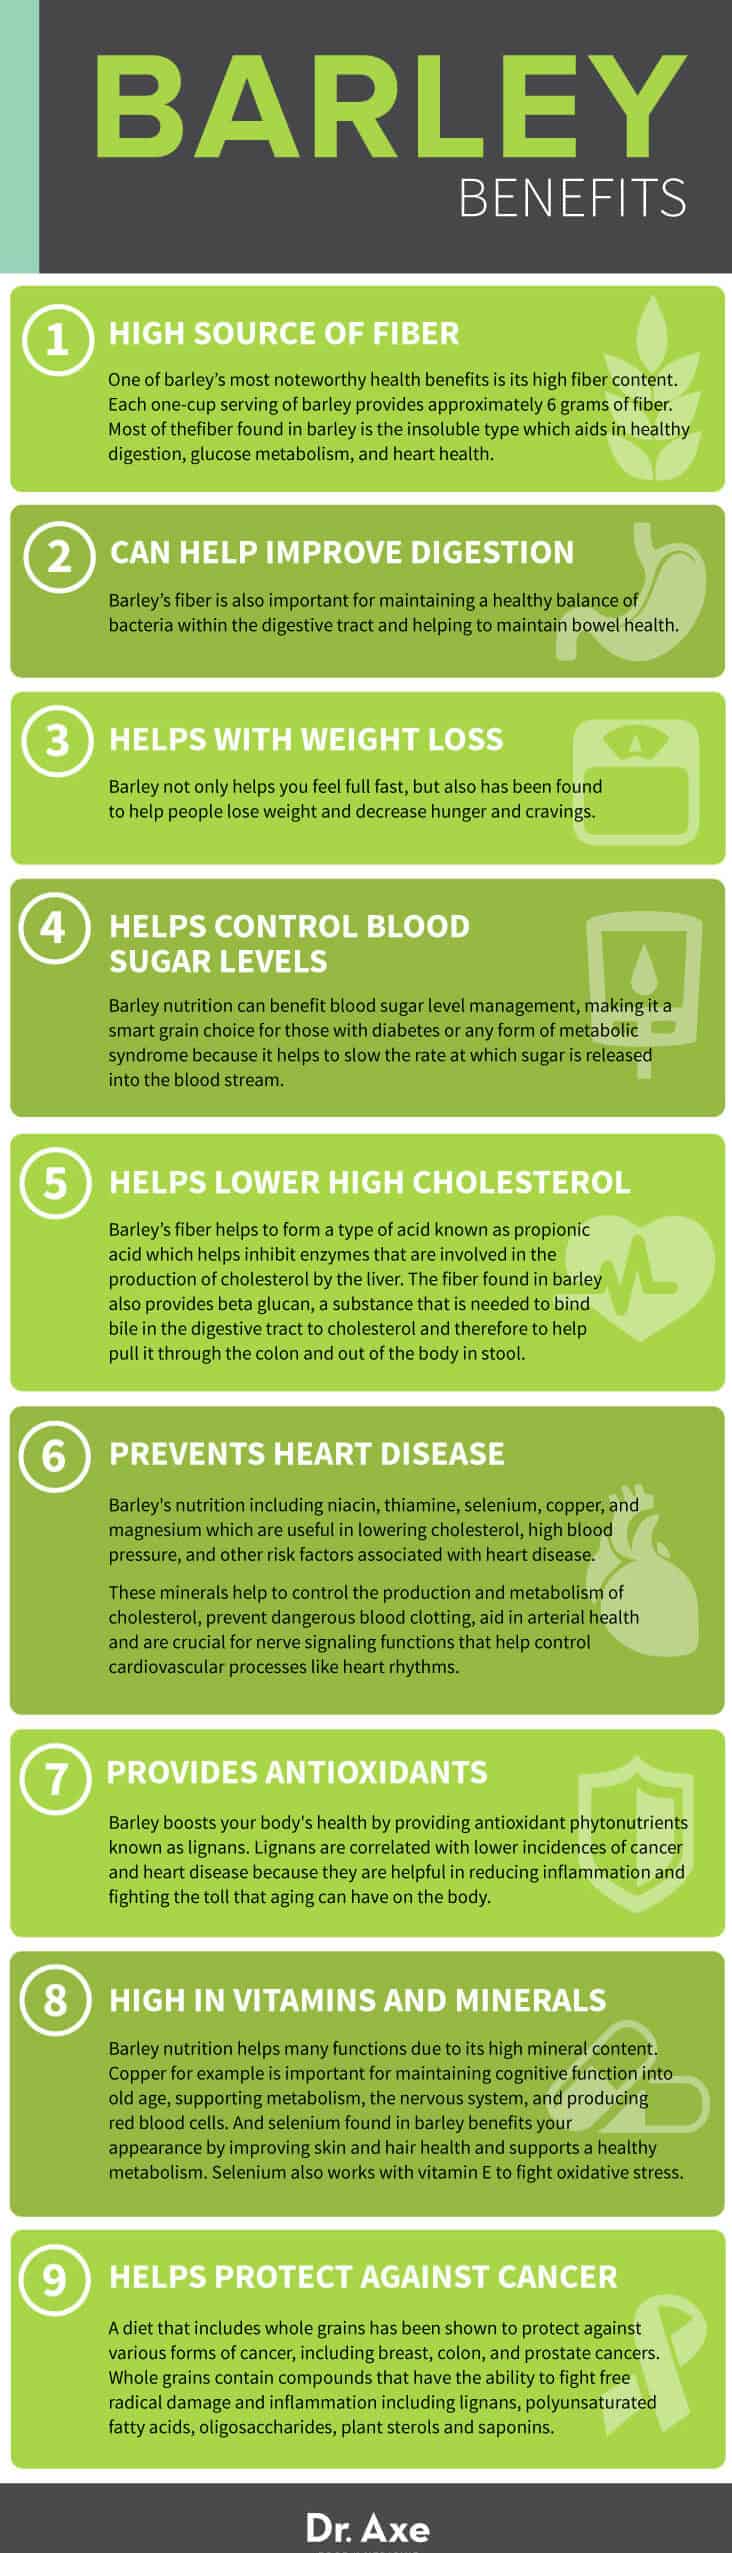 Barley Health Benefits Infographic List